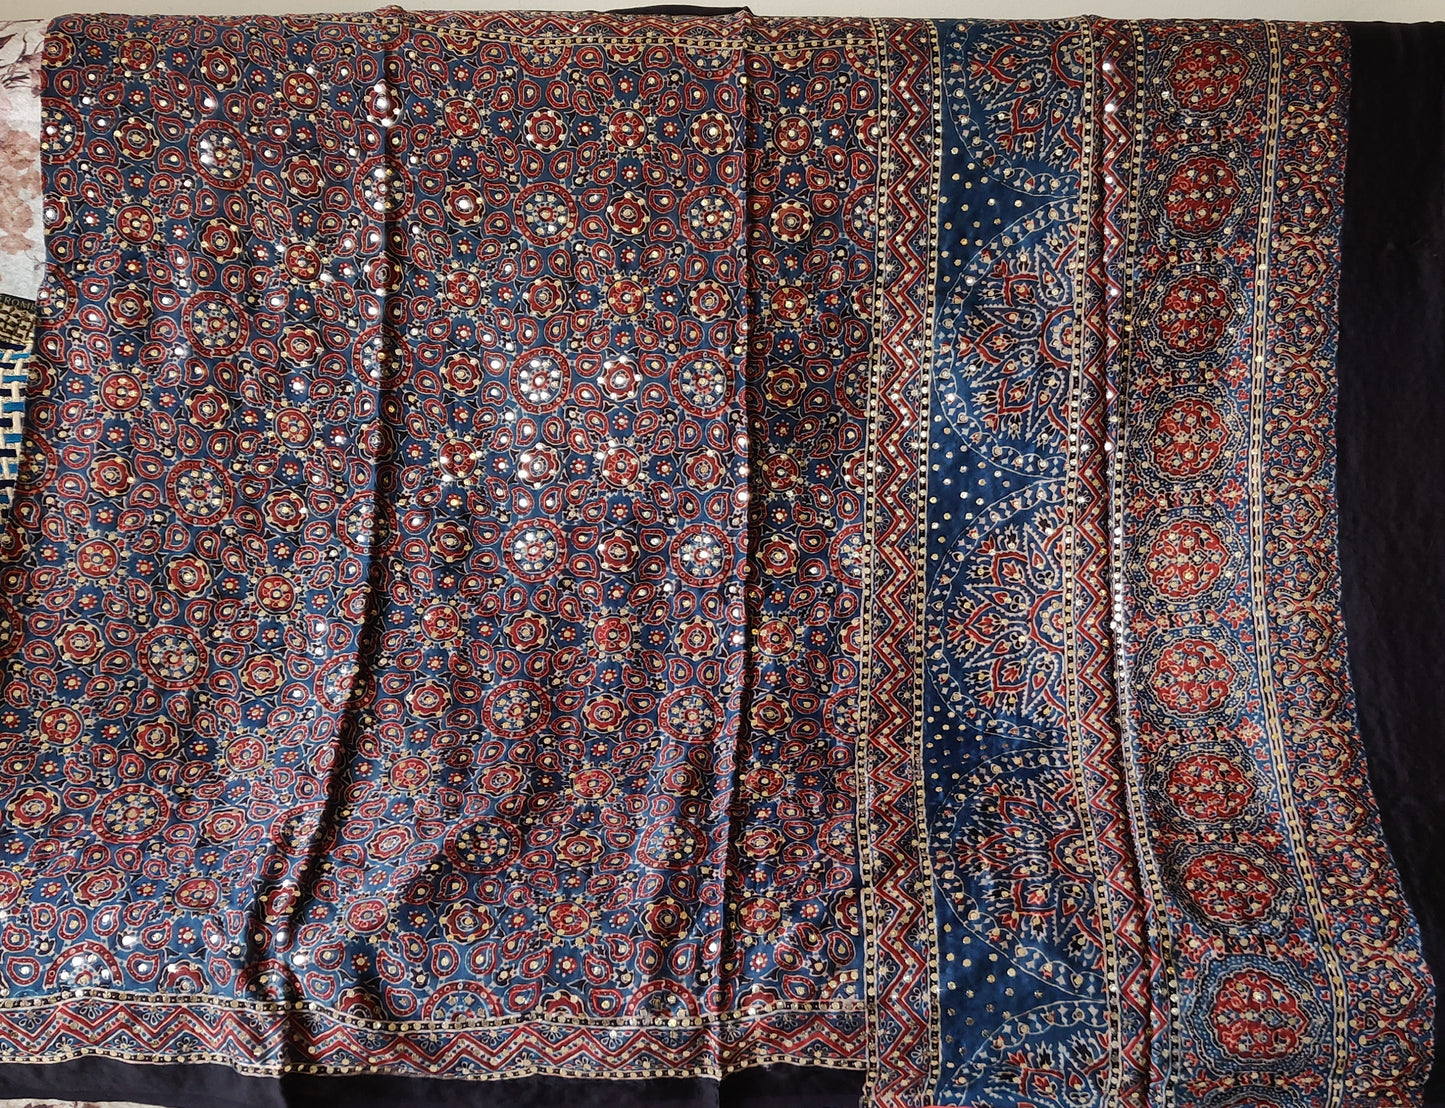 Blue modal silk ajrakh block printed dupatta with heavy mukaish